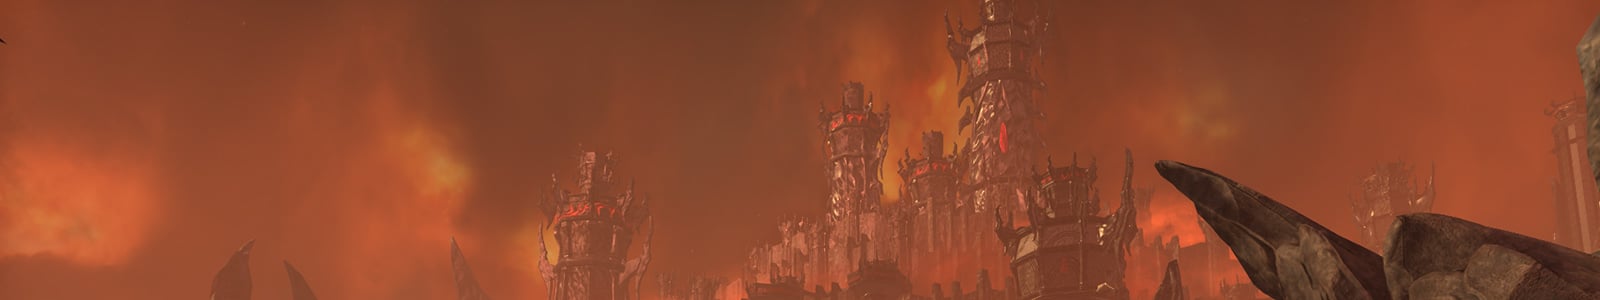 Hellfire and Brimstone Achievement Guide header